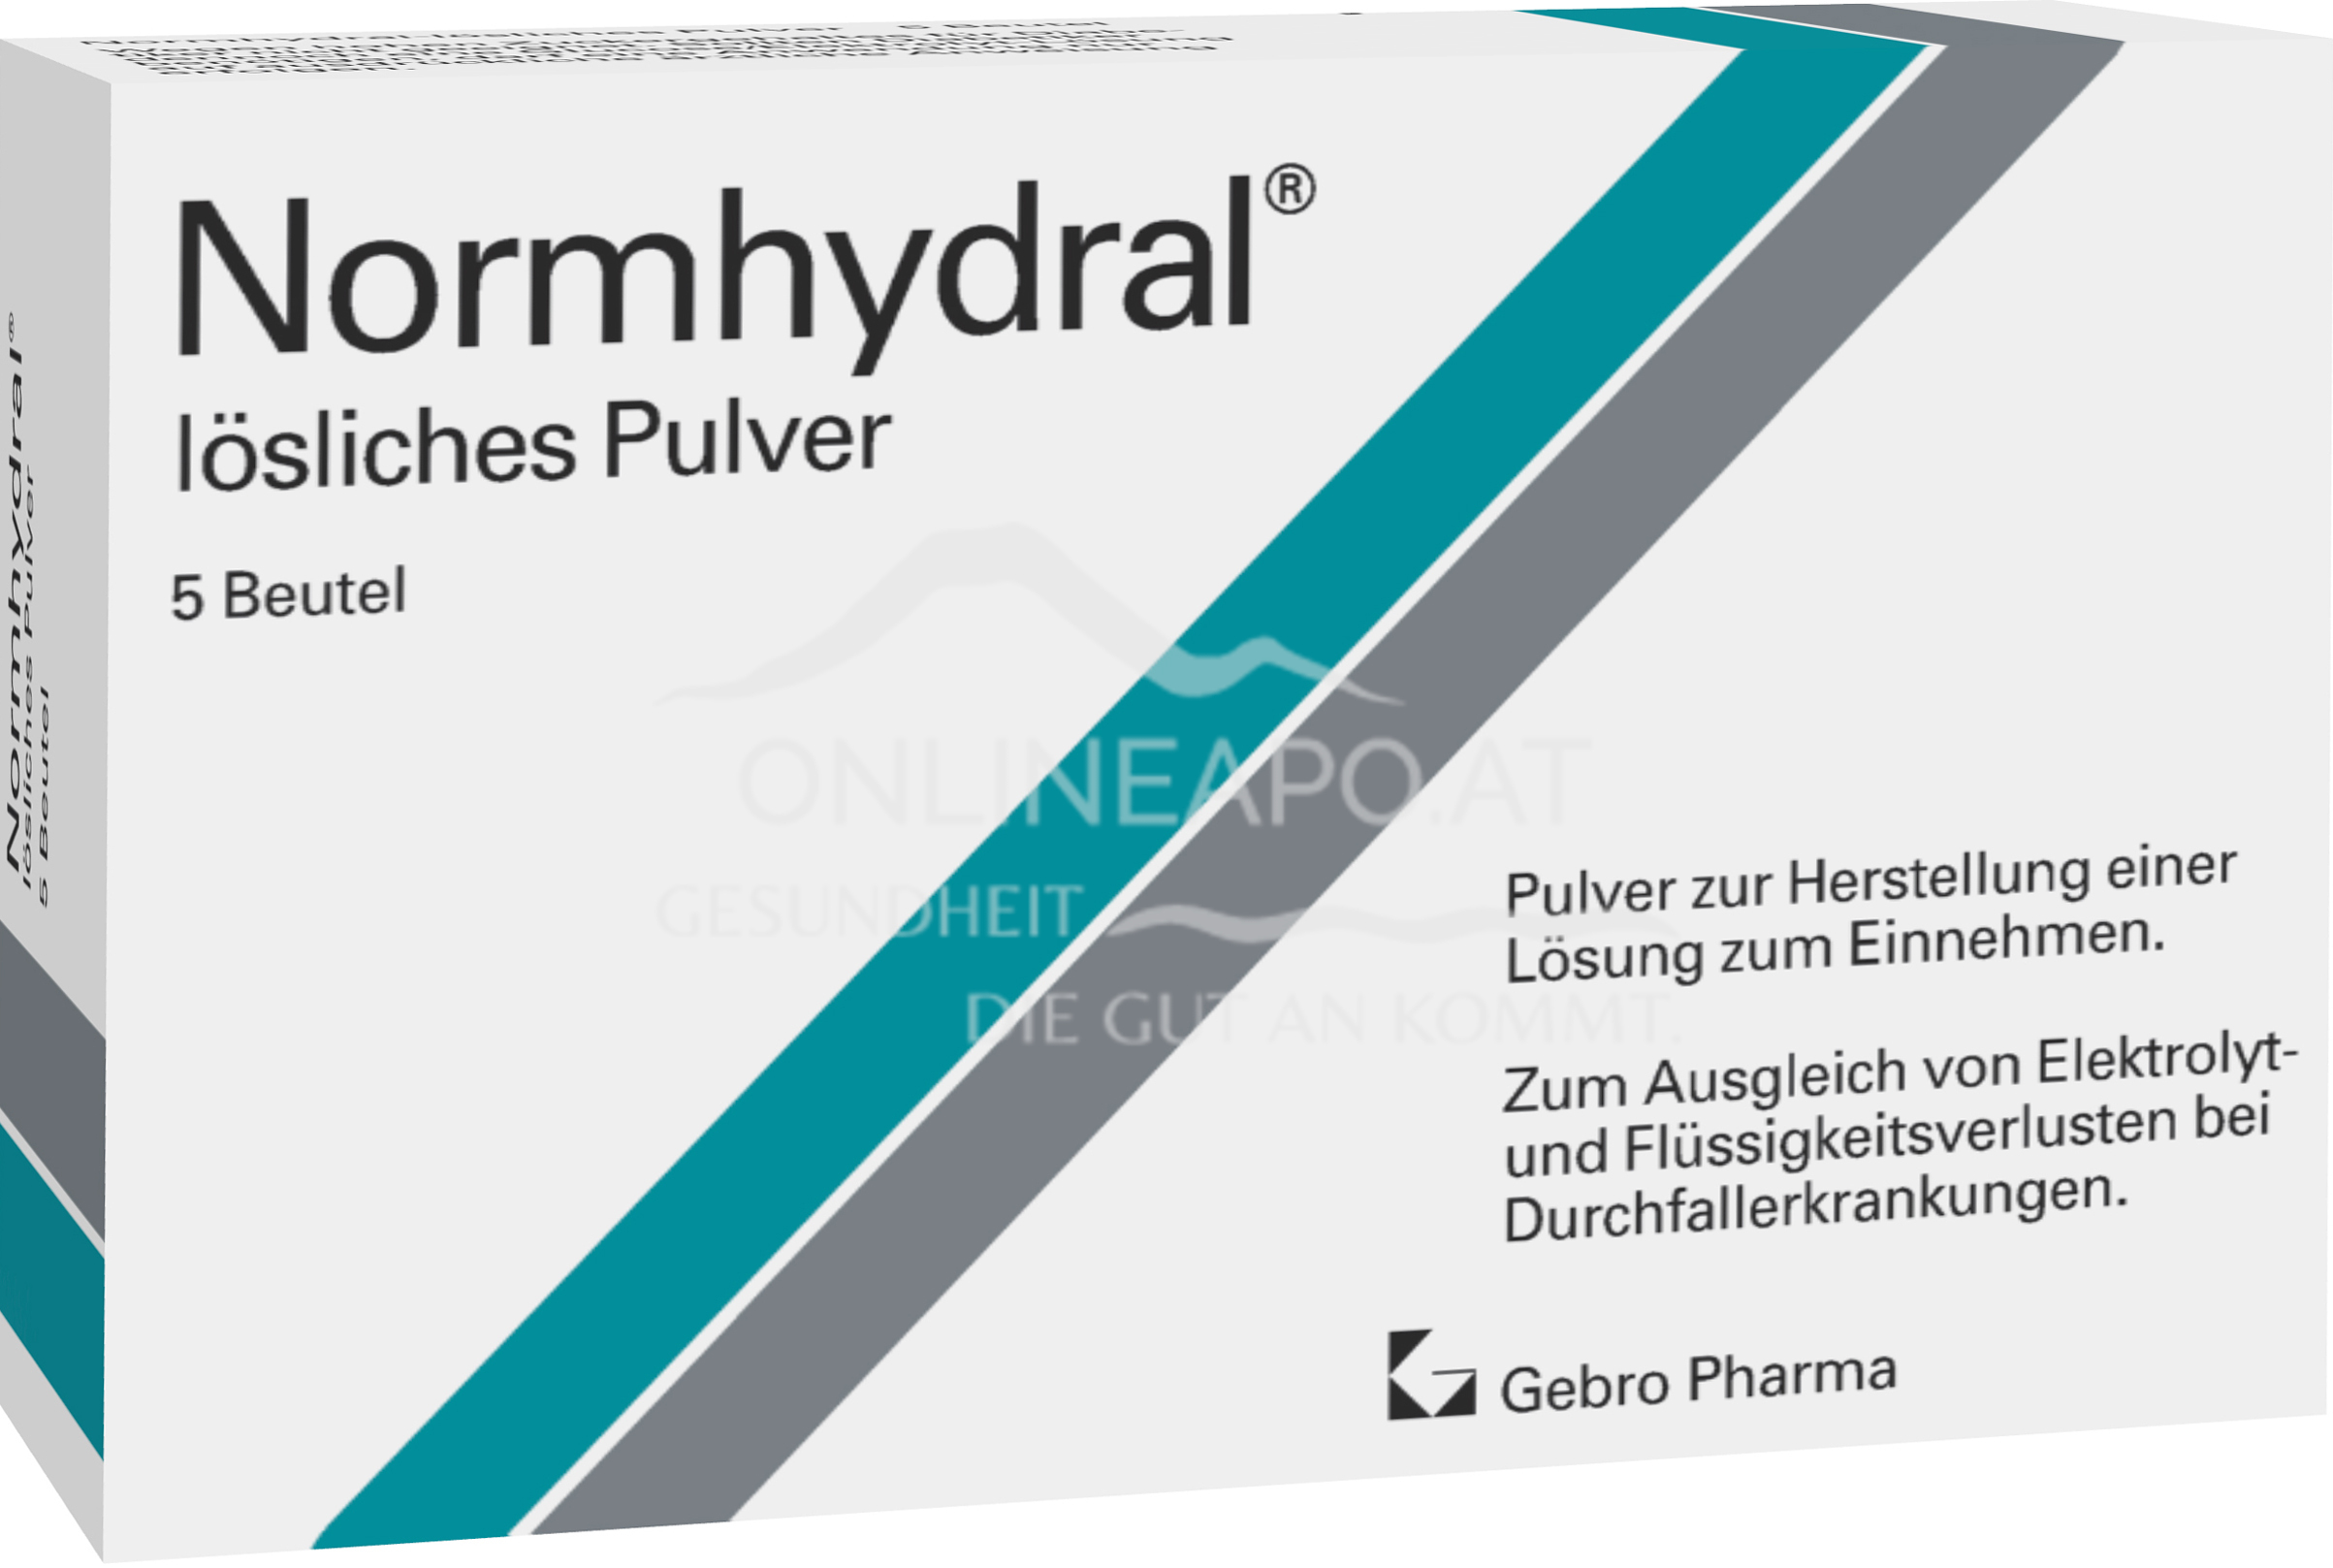 Normhydral® lösliches Pulver